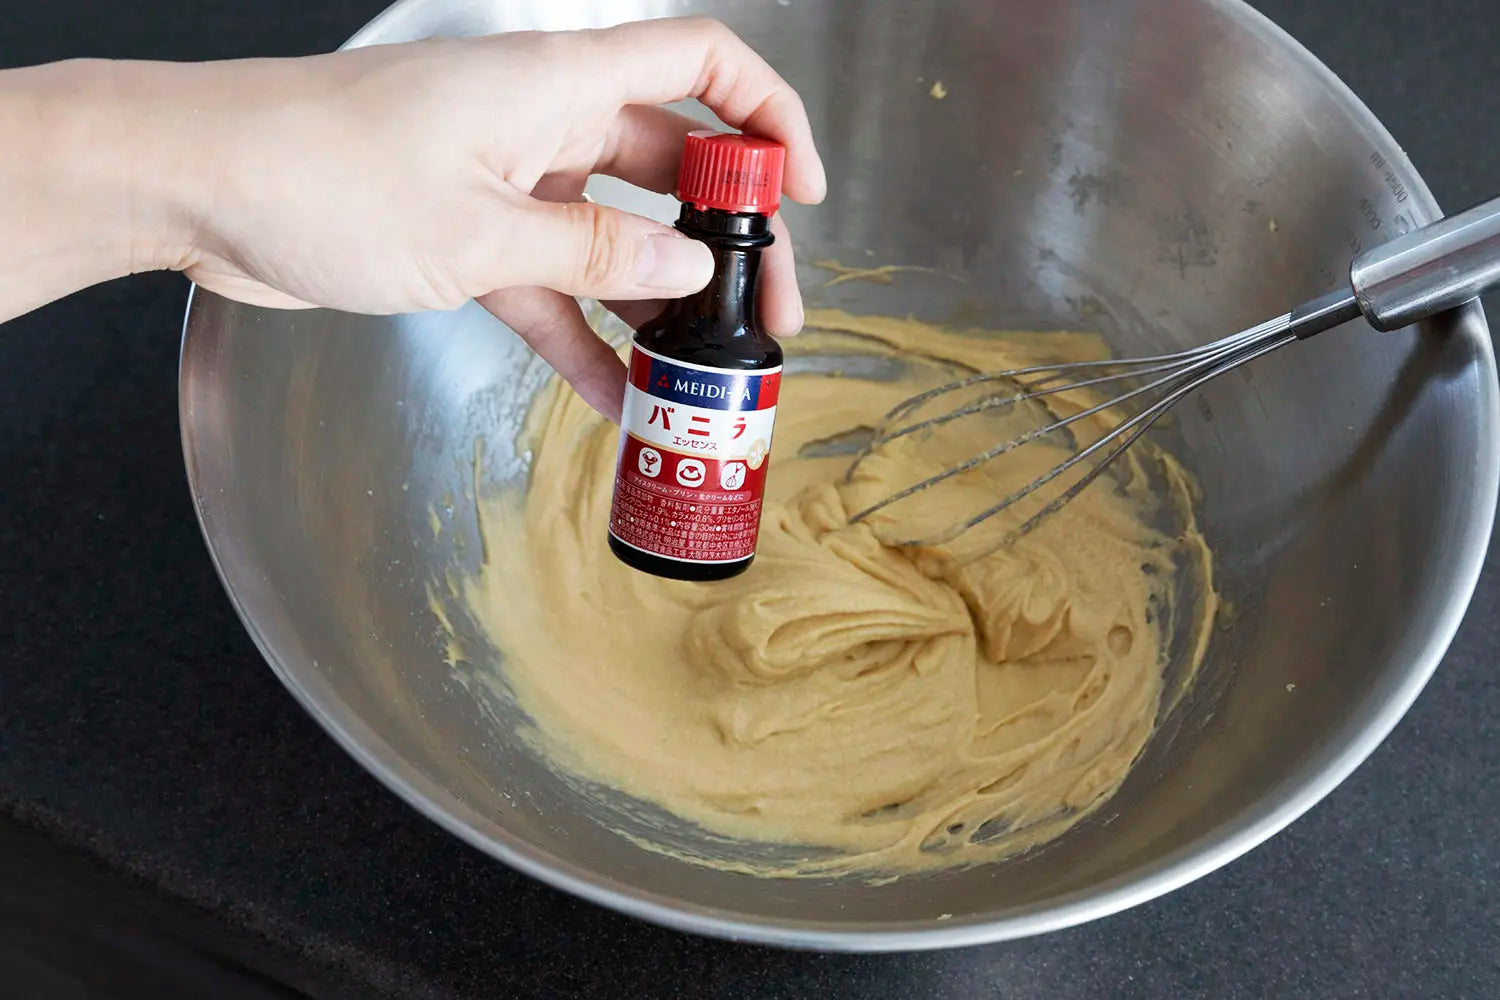 Adding vanilla essence to mixture